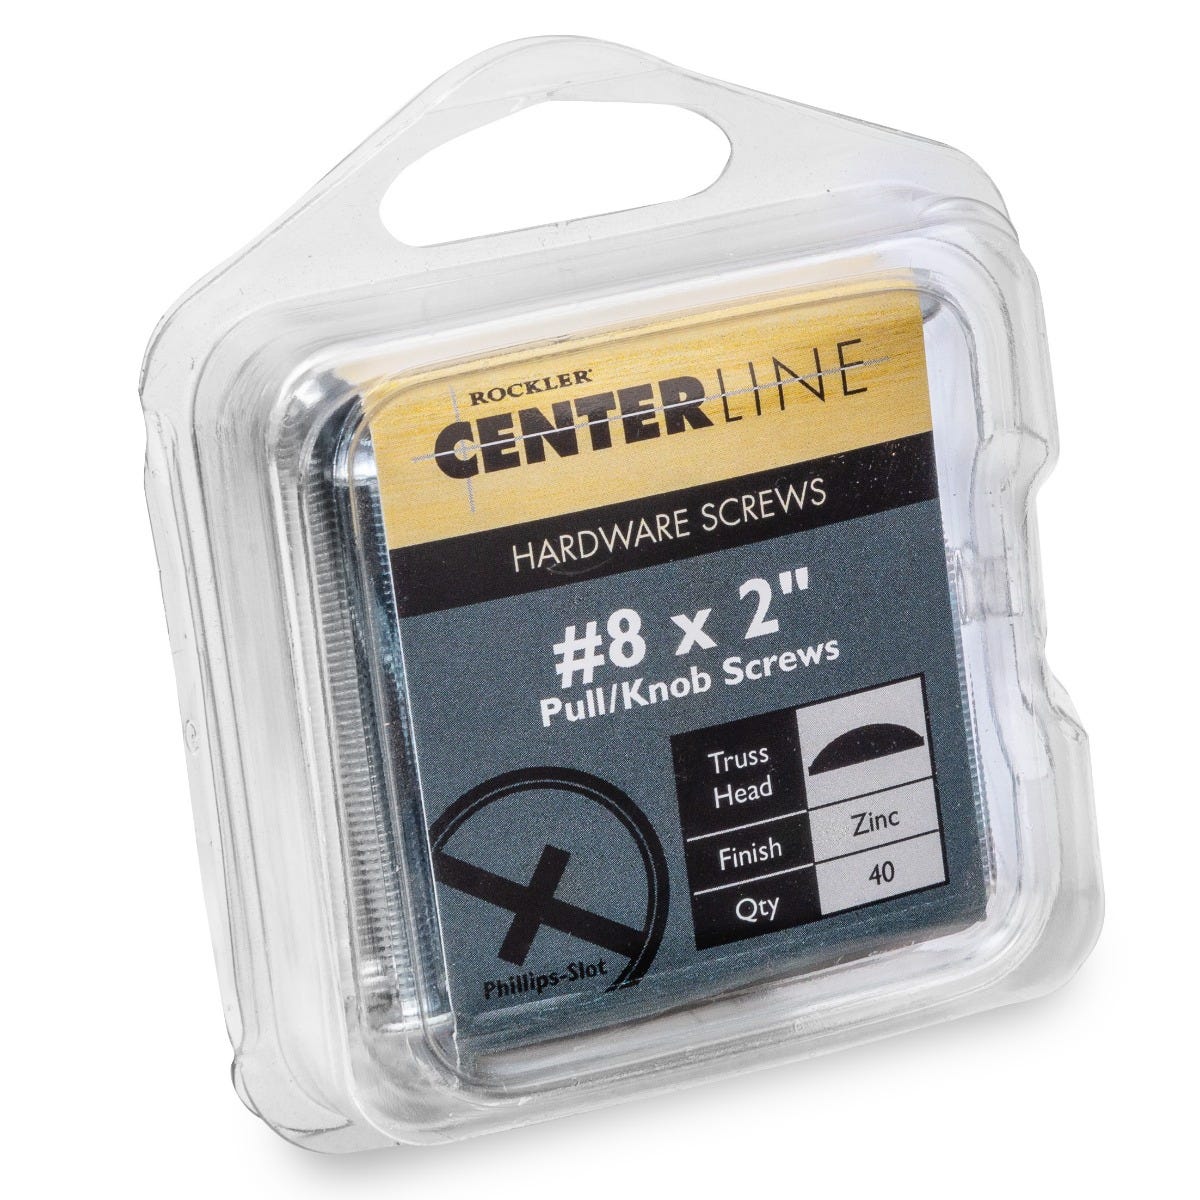 Rockler Centerline 8-32 x 2'' Truss Head Slot/Phillips Machine Screws for Pulls and Knobs, Zinc, 40-Pack